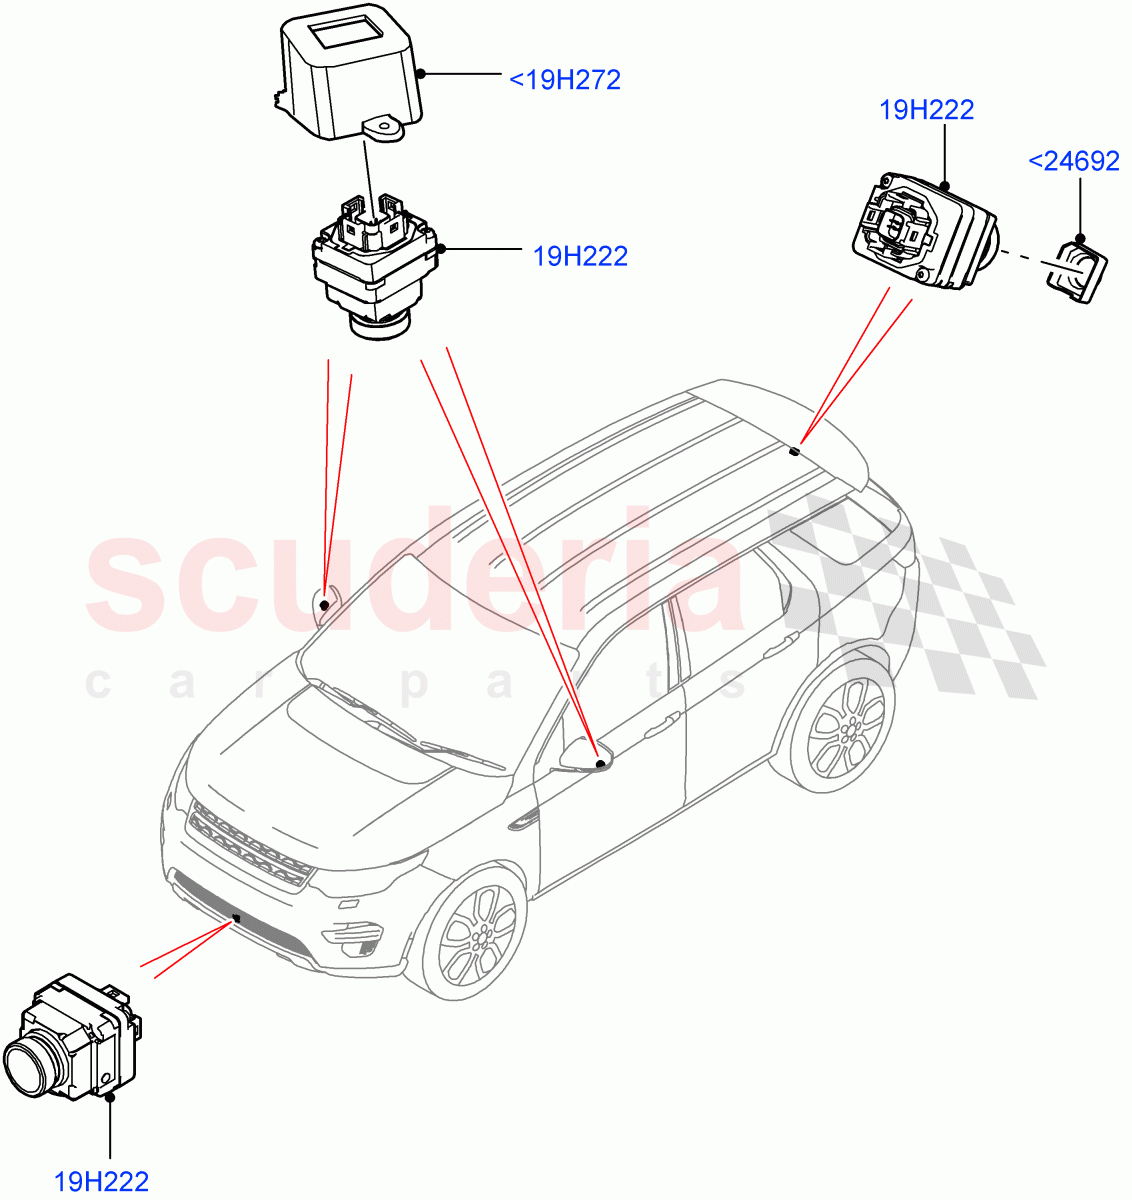 Camera Equipment(Halewood (UK),Surround Camera System,Surround Camera Sys+Water Wade Aid,3D Surround Camera)((V)FROMMH000001) of Land Rover Land Rover Discovery Sport (2015+) [2.0 Turbo Petrol AJ200P]